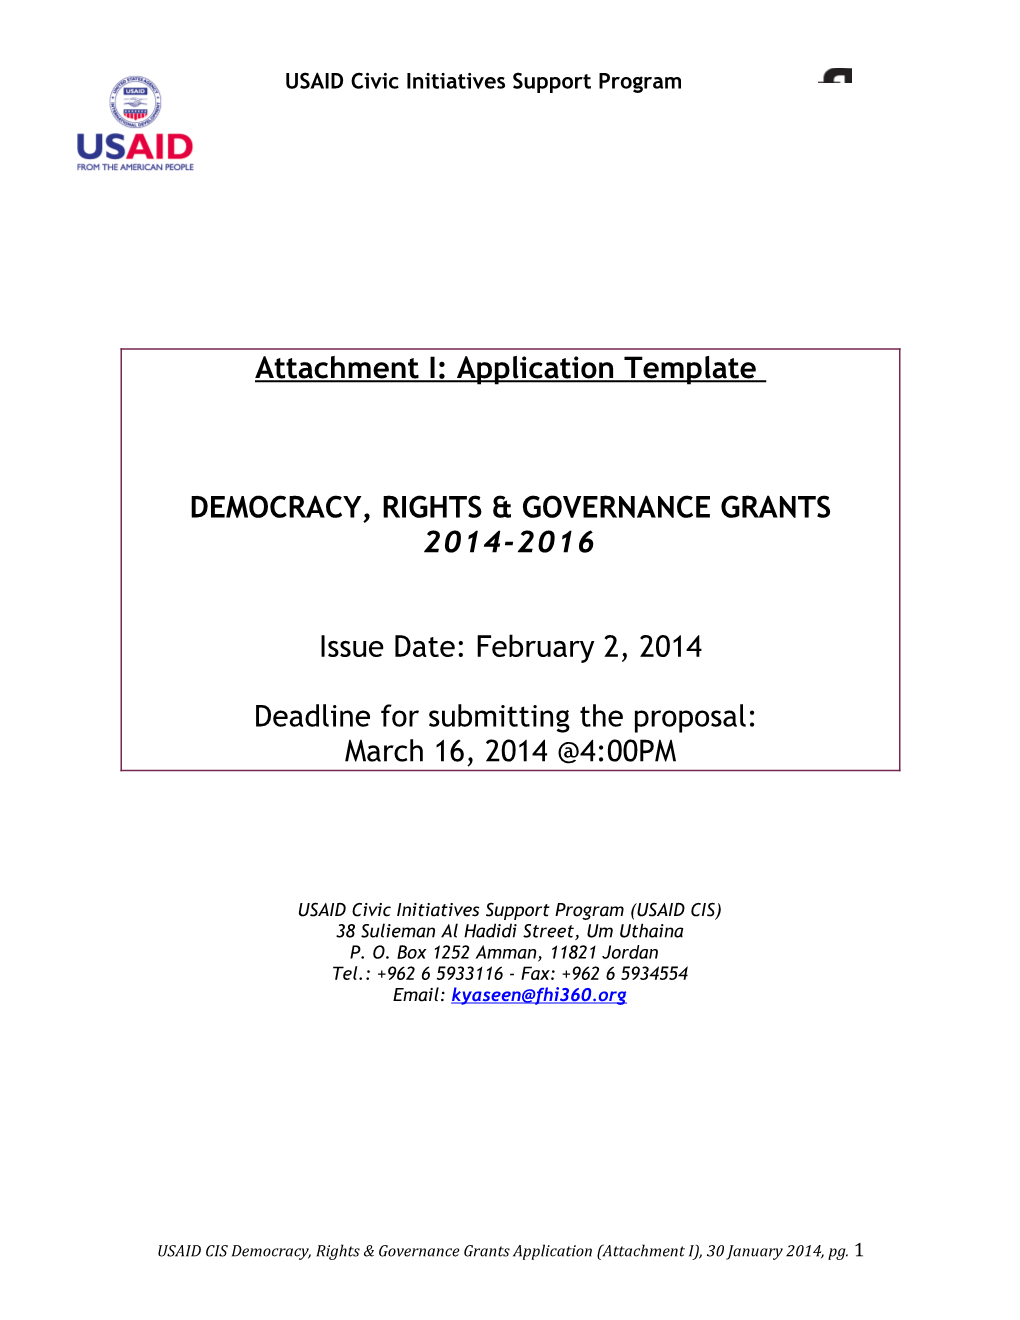 Democracy, Rights & Governance Grants